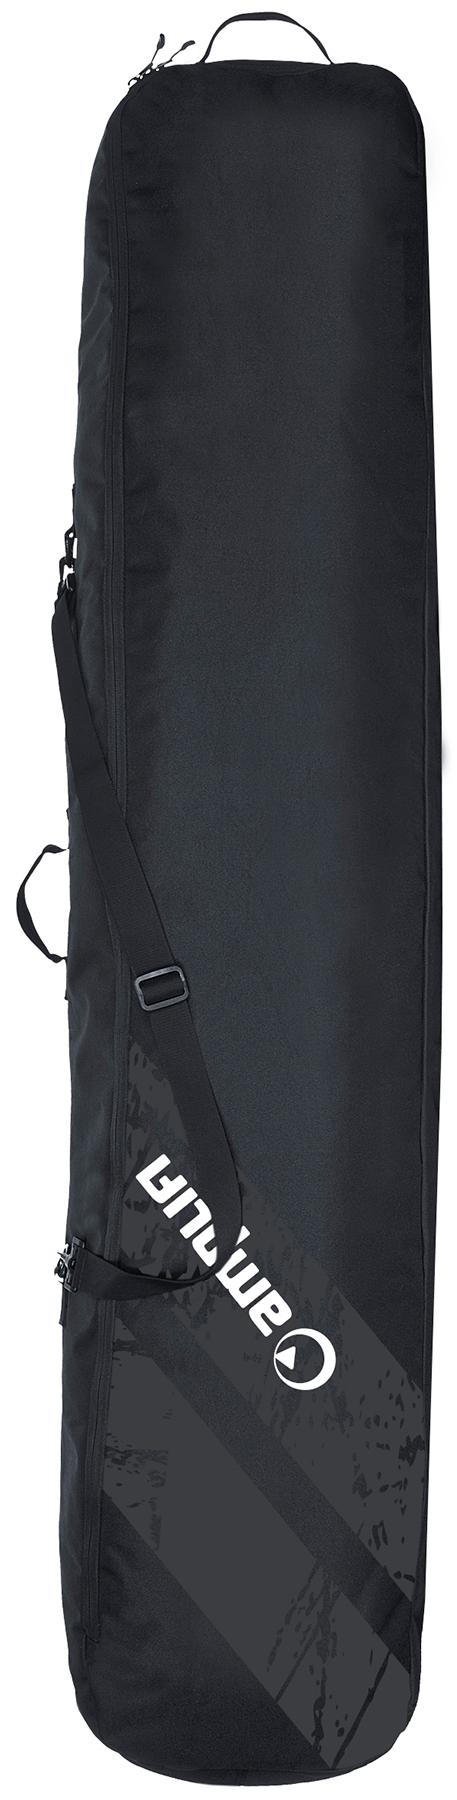 Чехол для сноуборда Amplifi Transfer Bag, black, 158 см